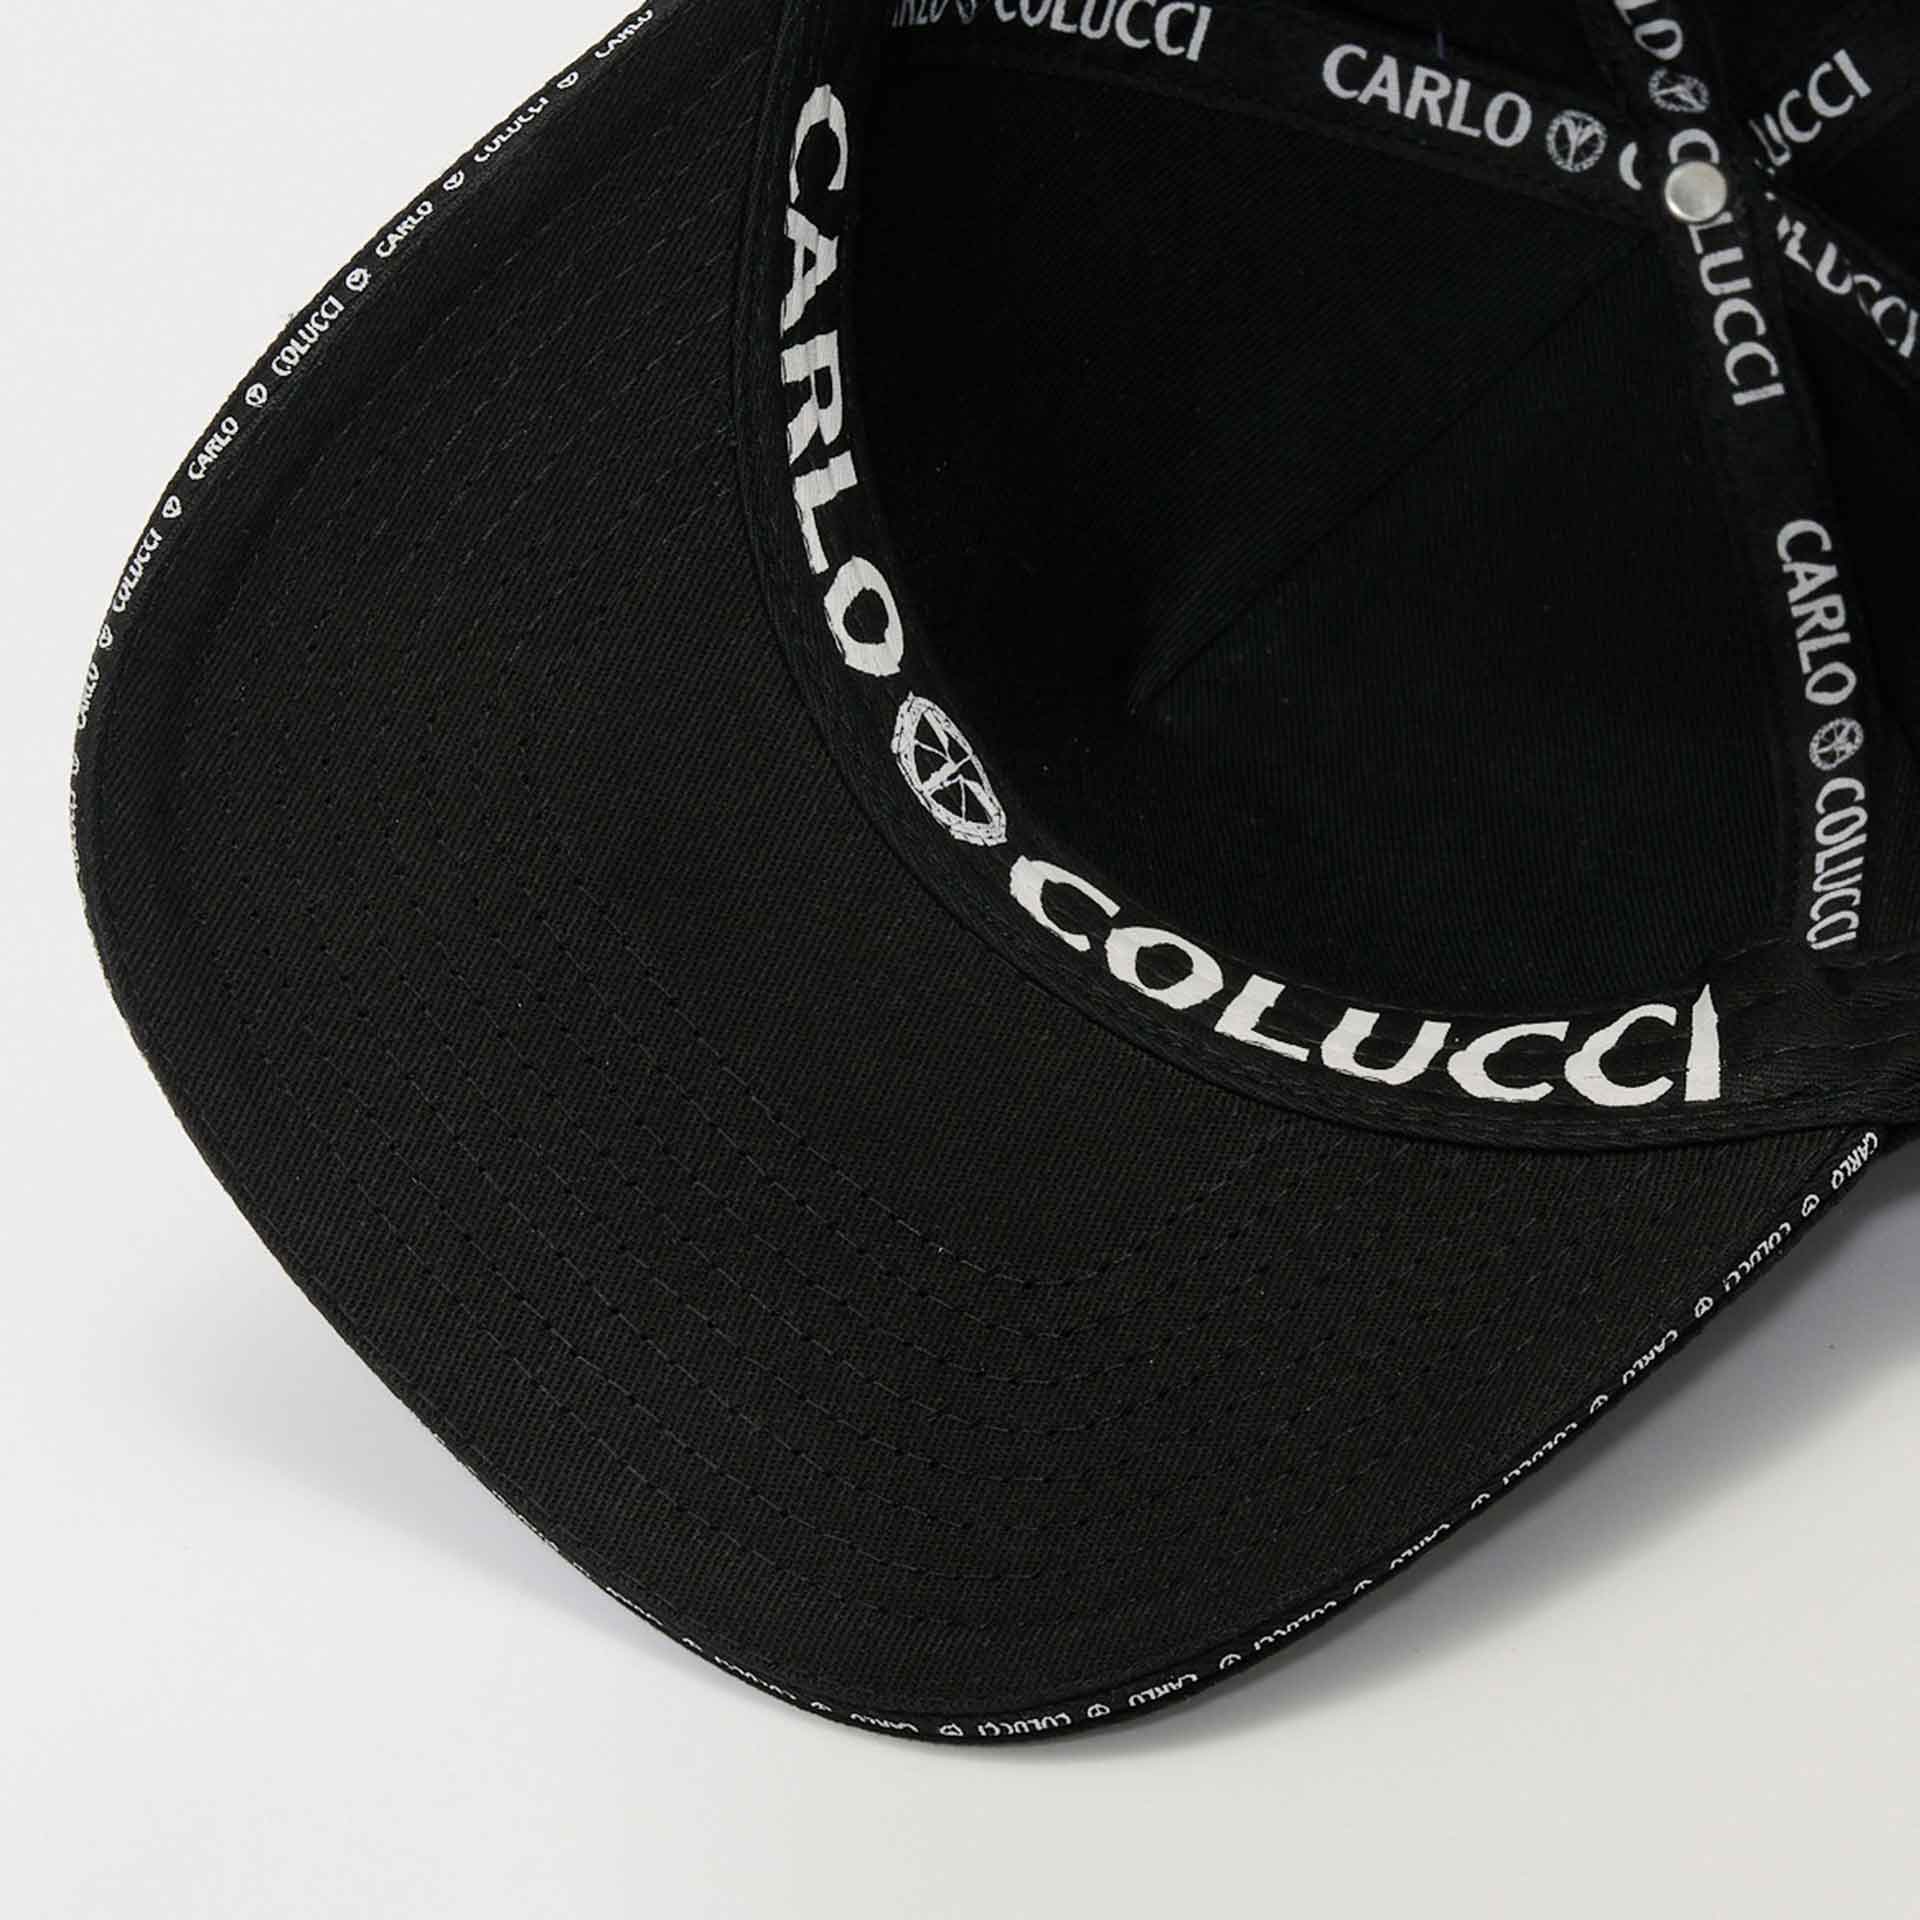 Carlo Colucci 3D Metal Ikarus Snapback Cap Black